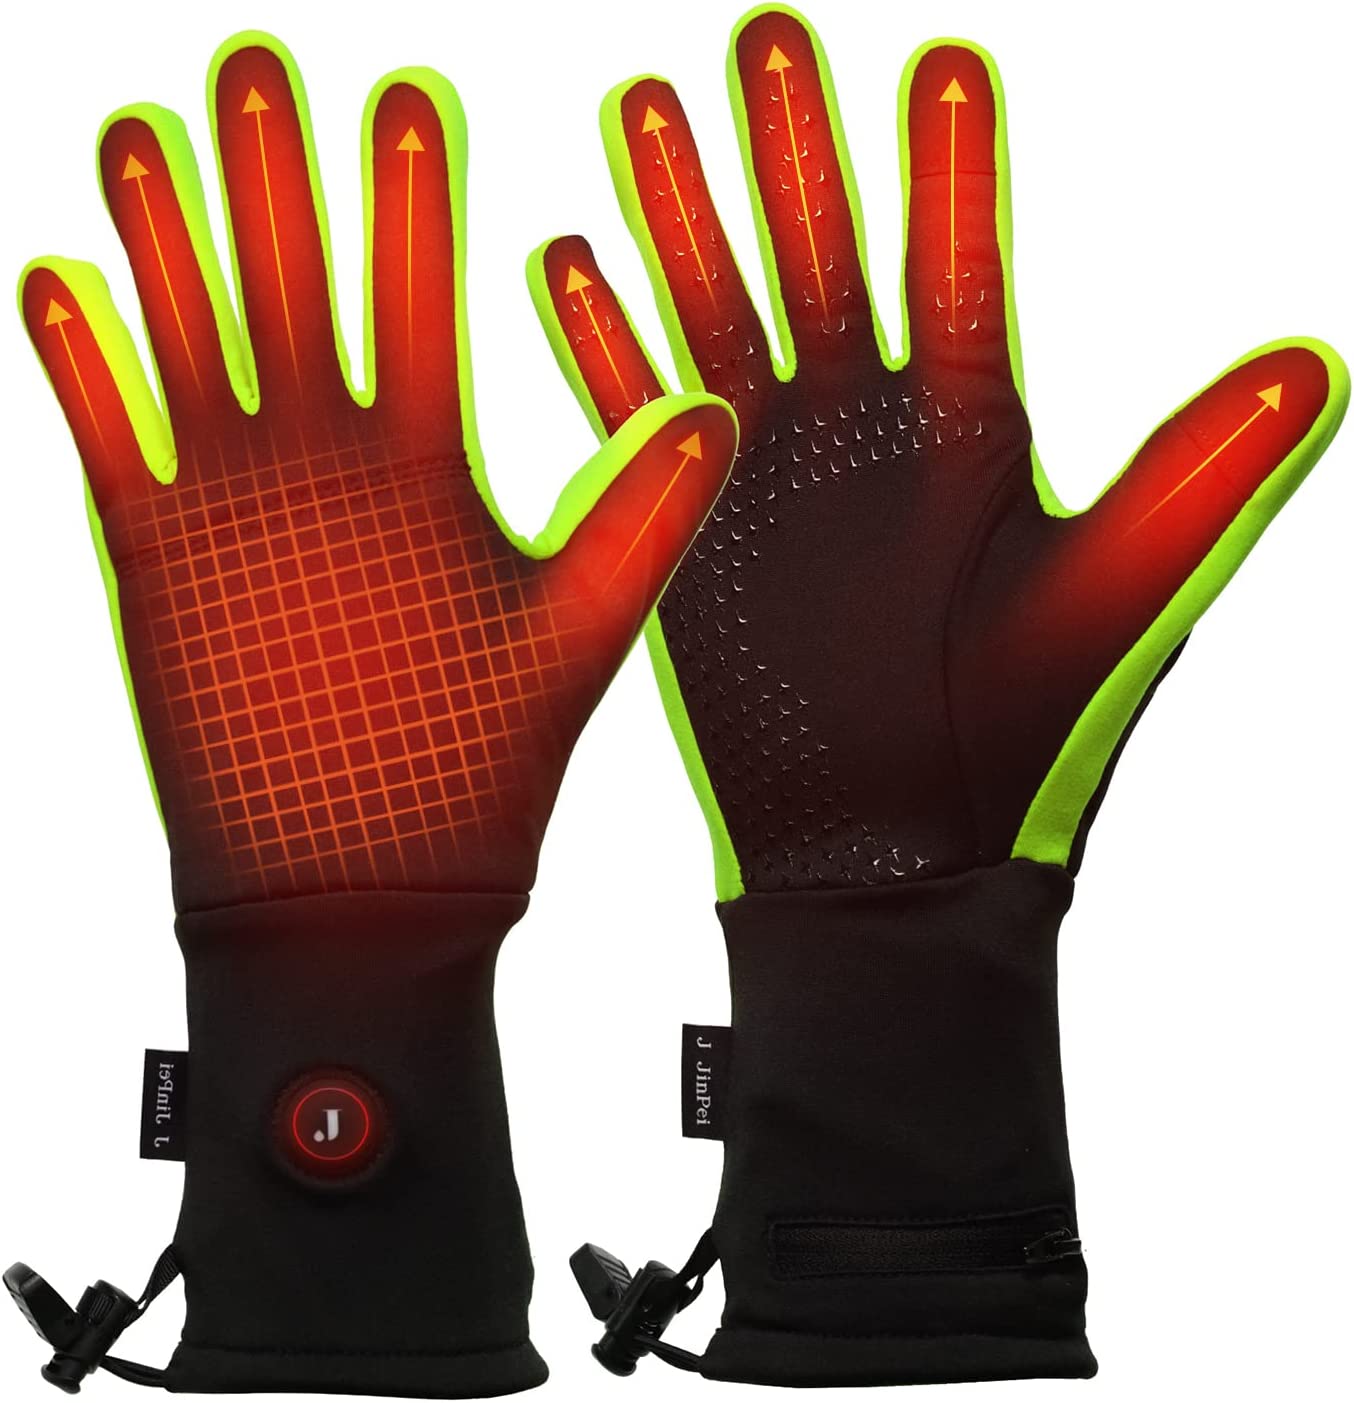 Lonheo heated gloves